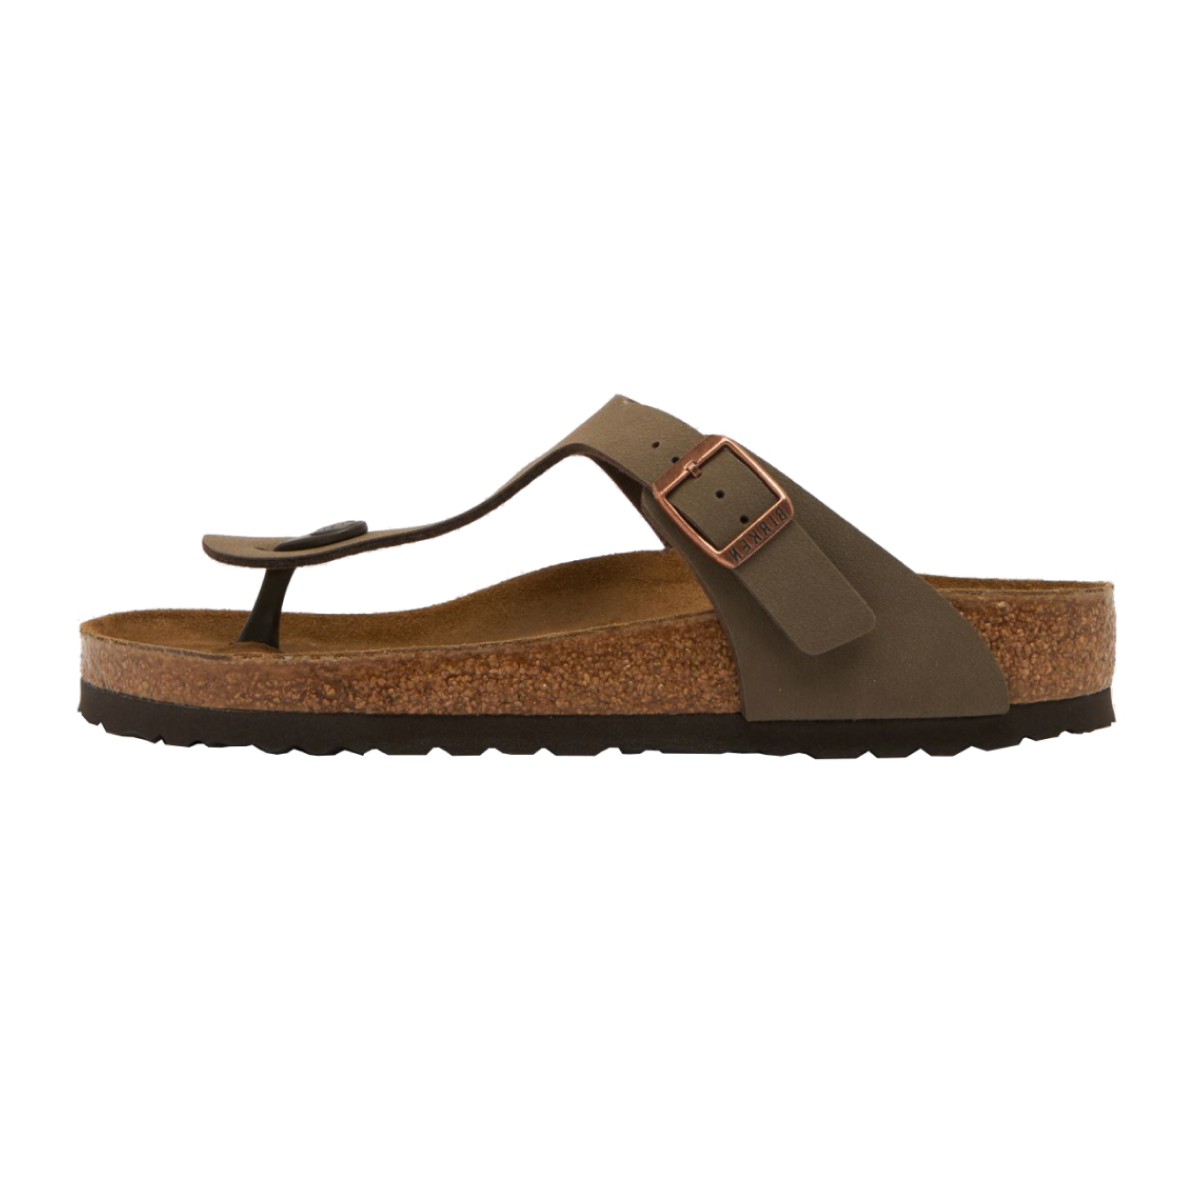 Stone coloured leather Birkenstock sandals